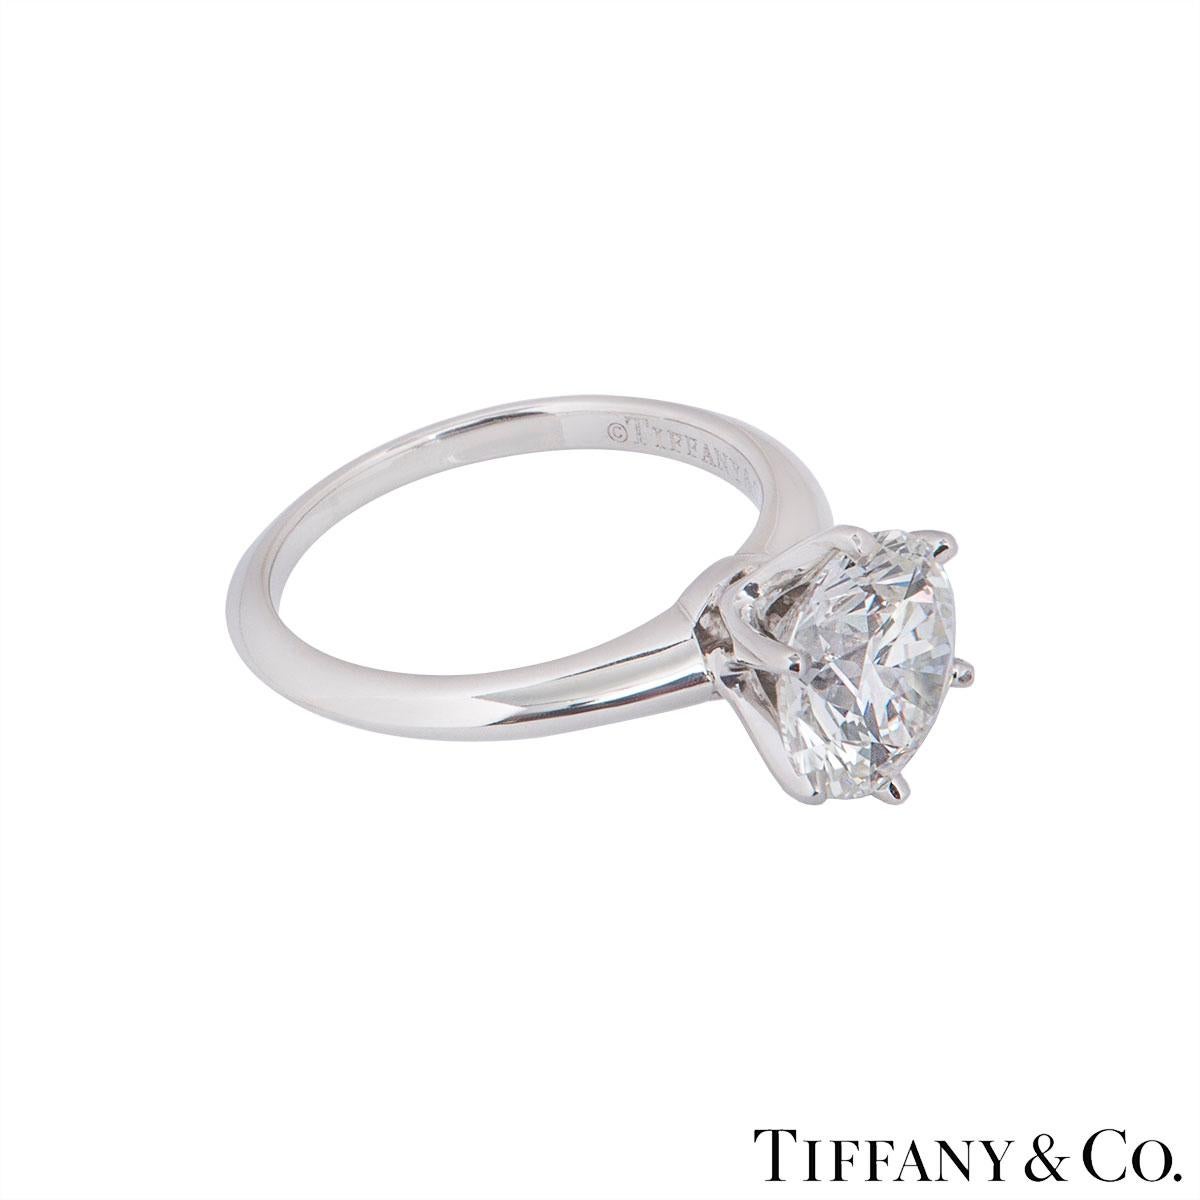 2.17 carat diamond ring price tiffany